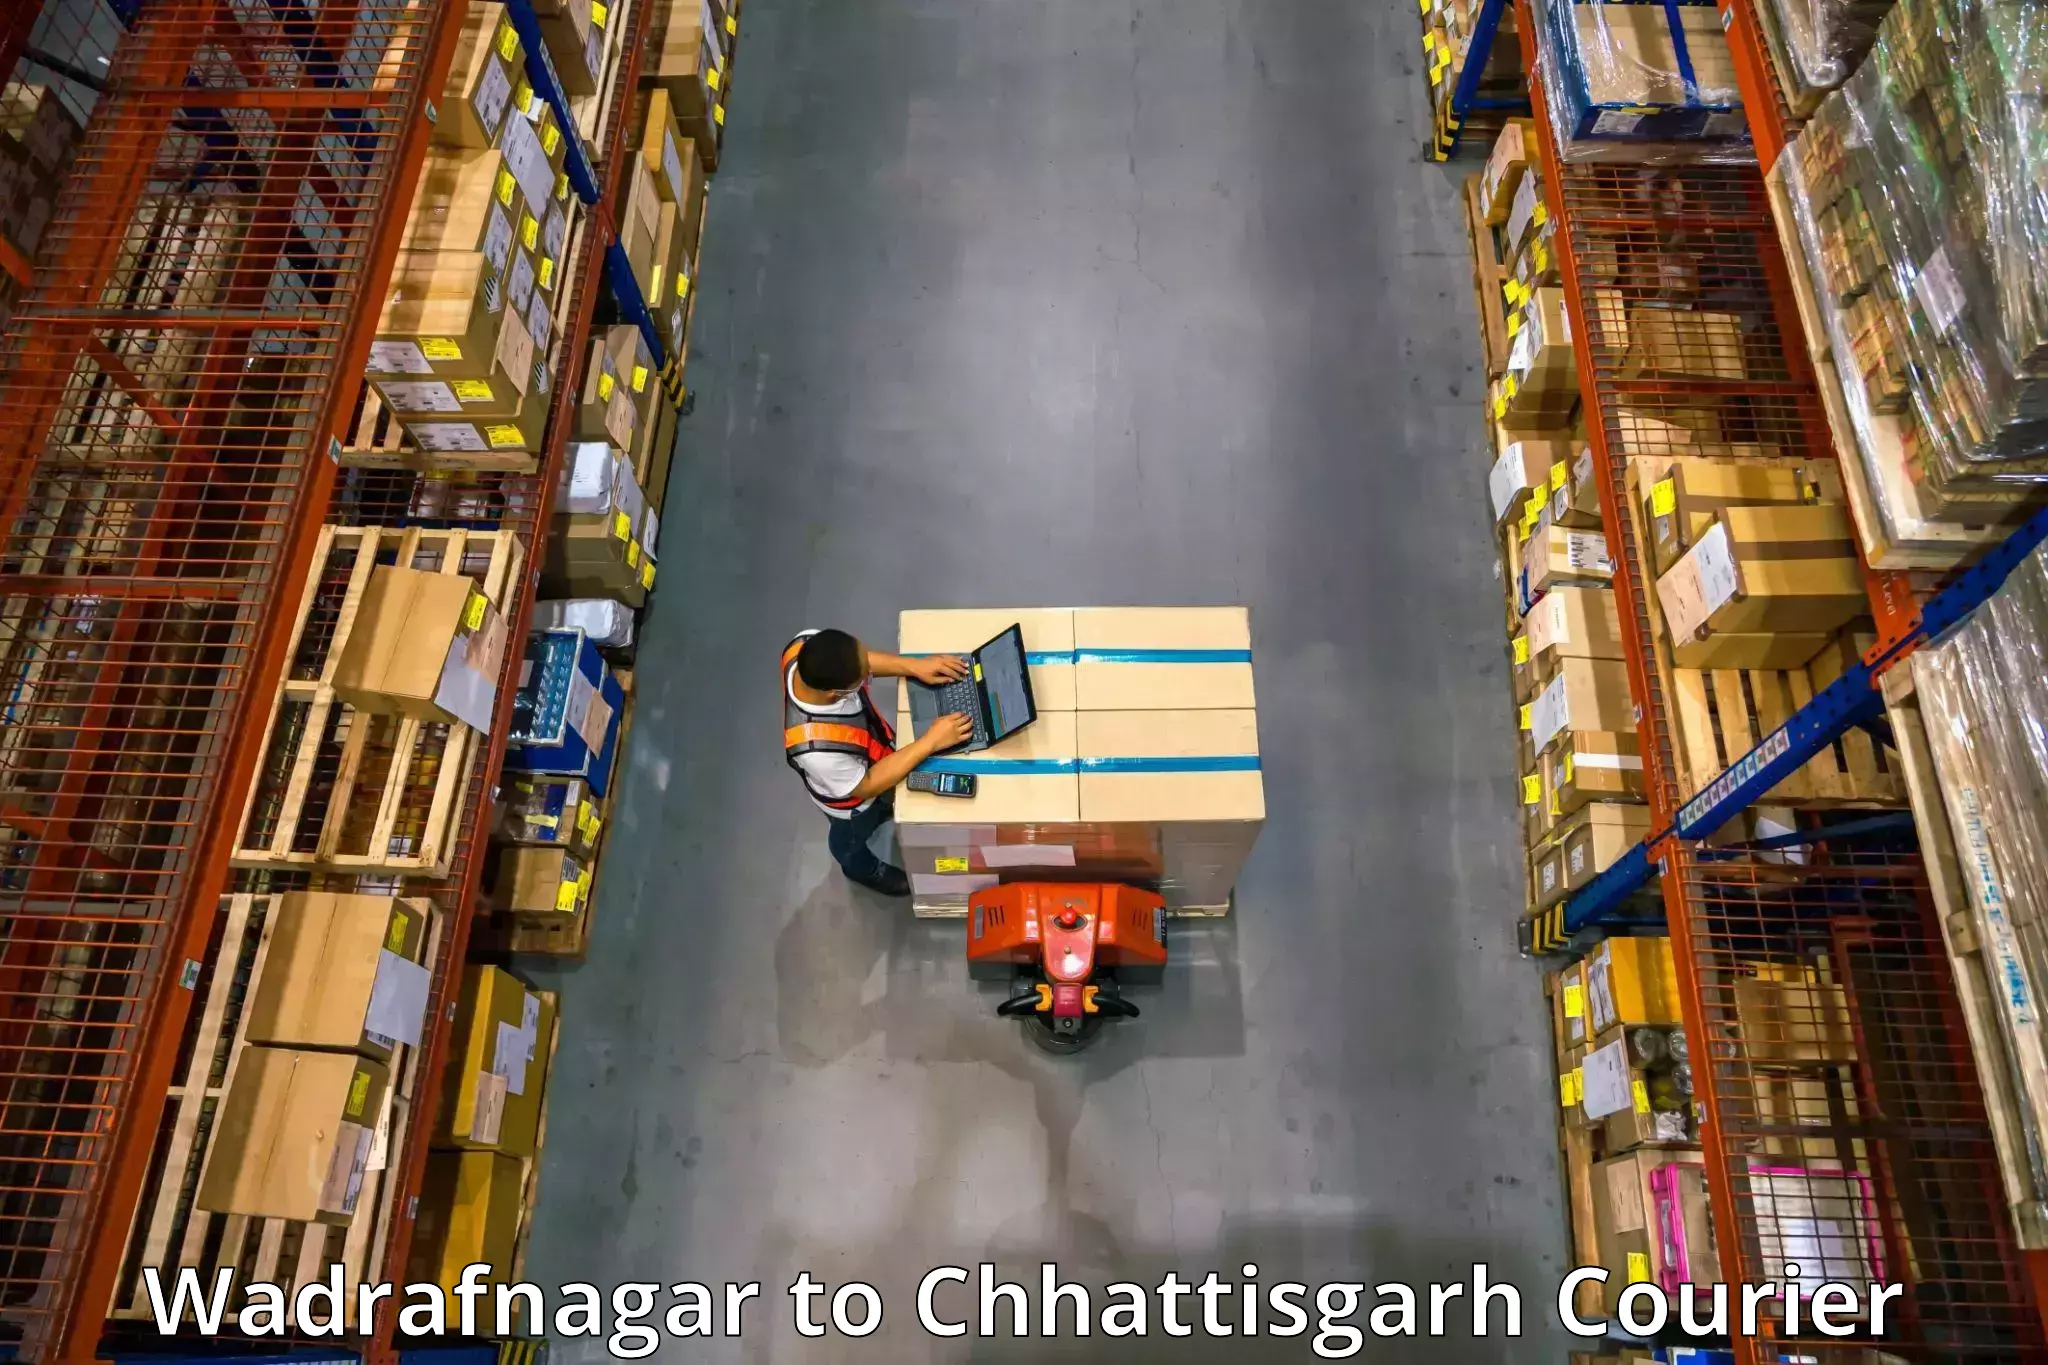 Furniture transport company Wadrafnagar to bagbahra